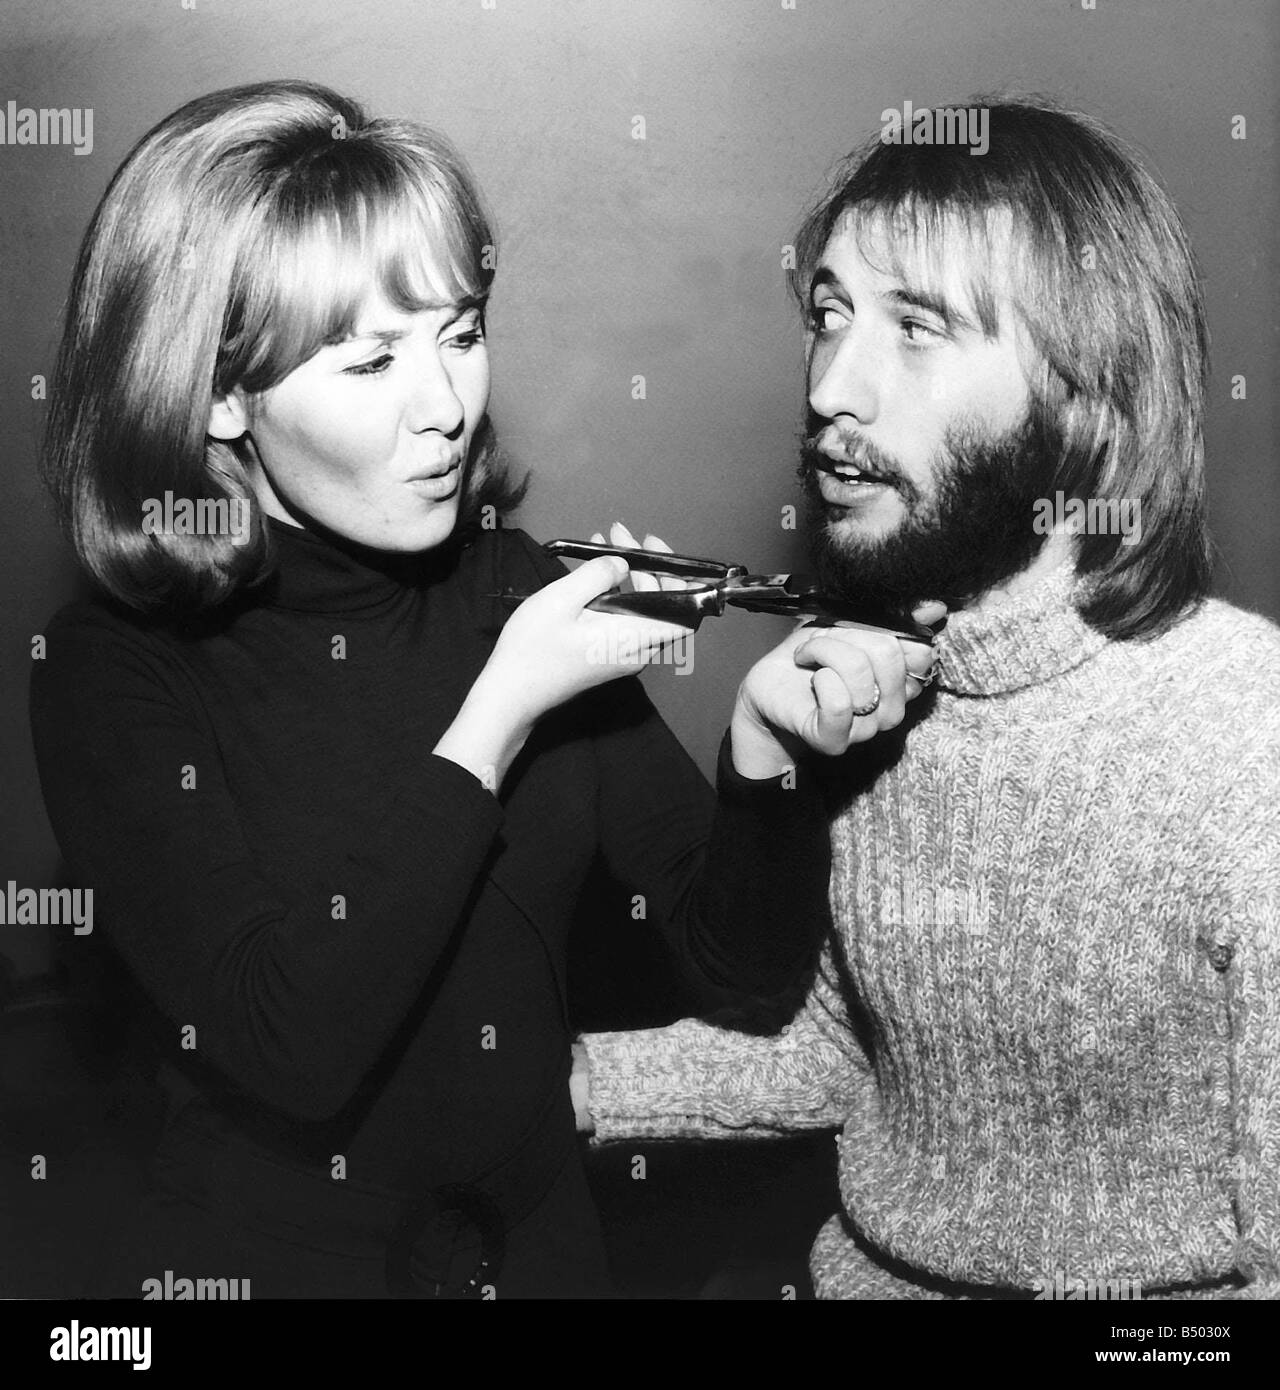 Lulu cantante dando marito Maurice Gibb dei Bee Gees una rasatura Foto Stock